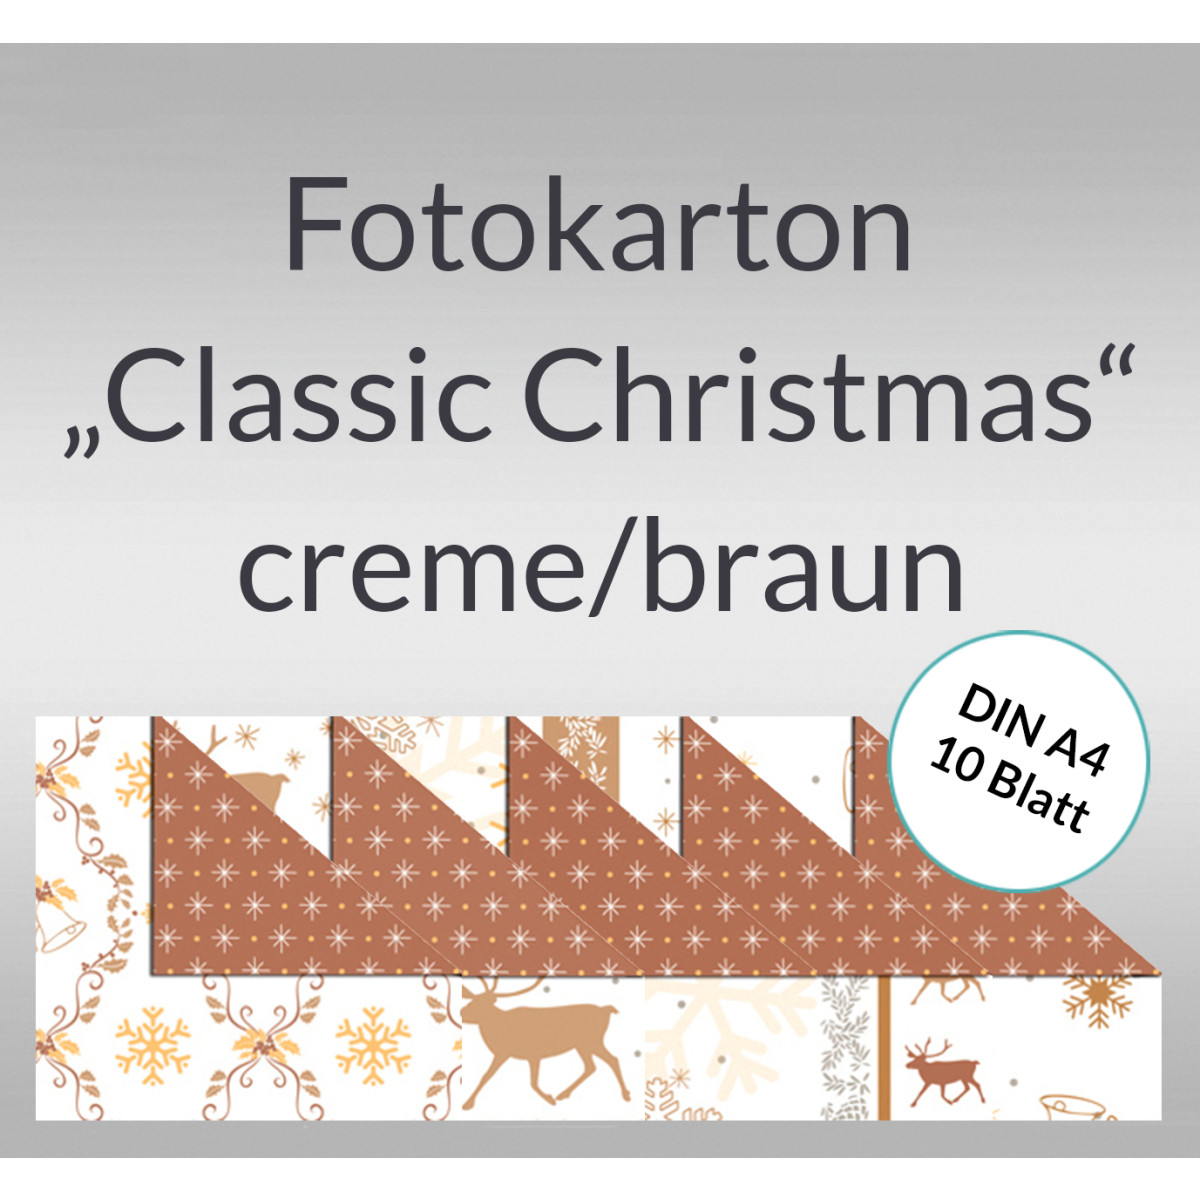 Fotokarton "Classic Christmas" creme/braun DIN A4 - 10 Blatt